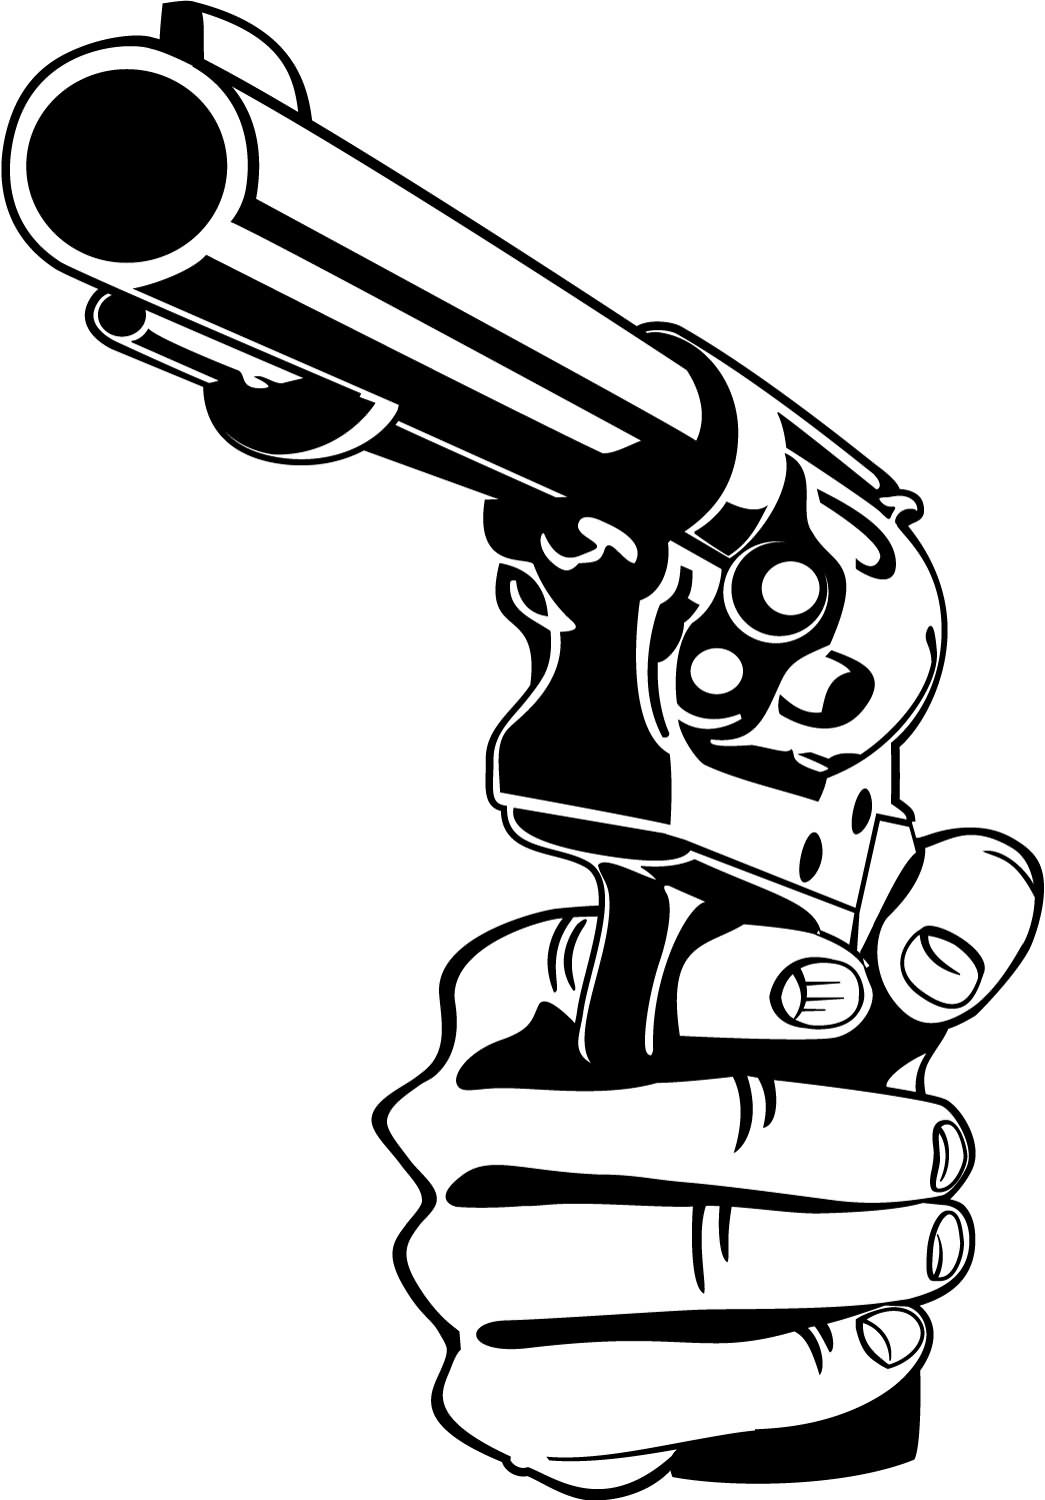 Black Gun In Hand Tattoo Stencil